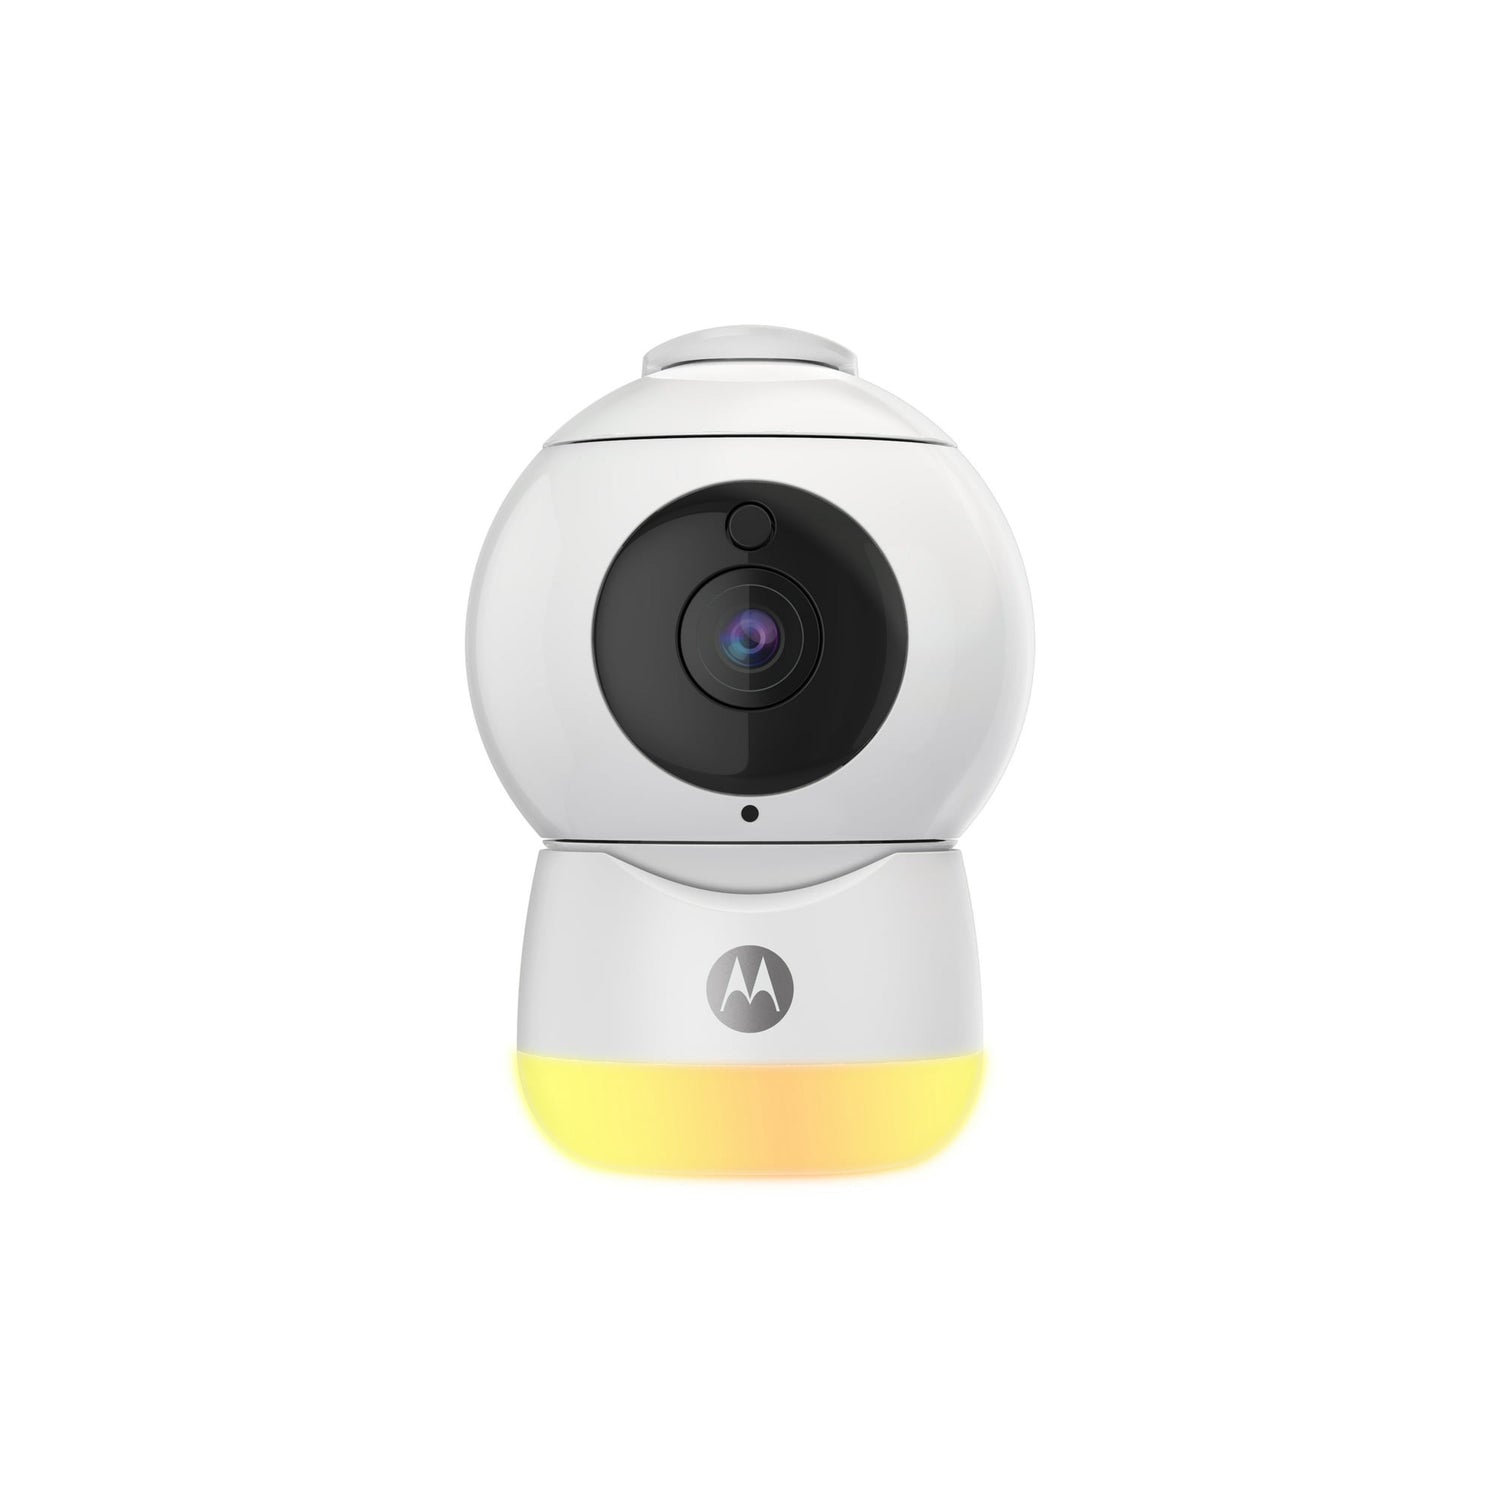 Motorola Peekaboo Full HD 1080p WiFi Video Baby Camera with Night Light - White (Refurbished)